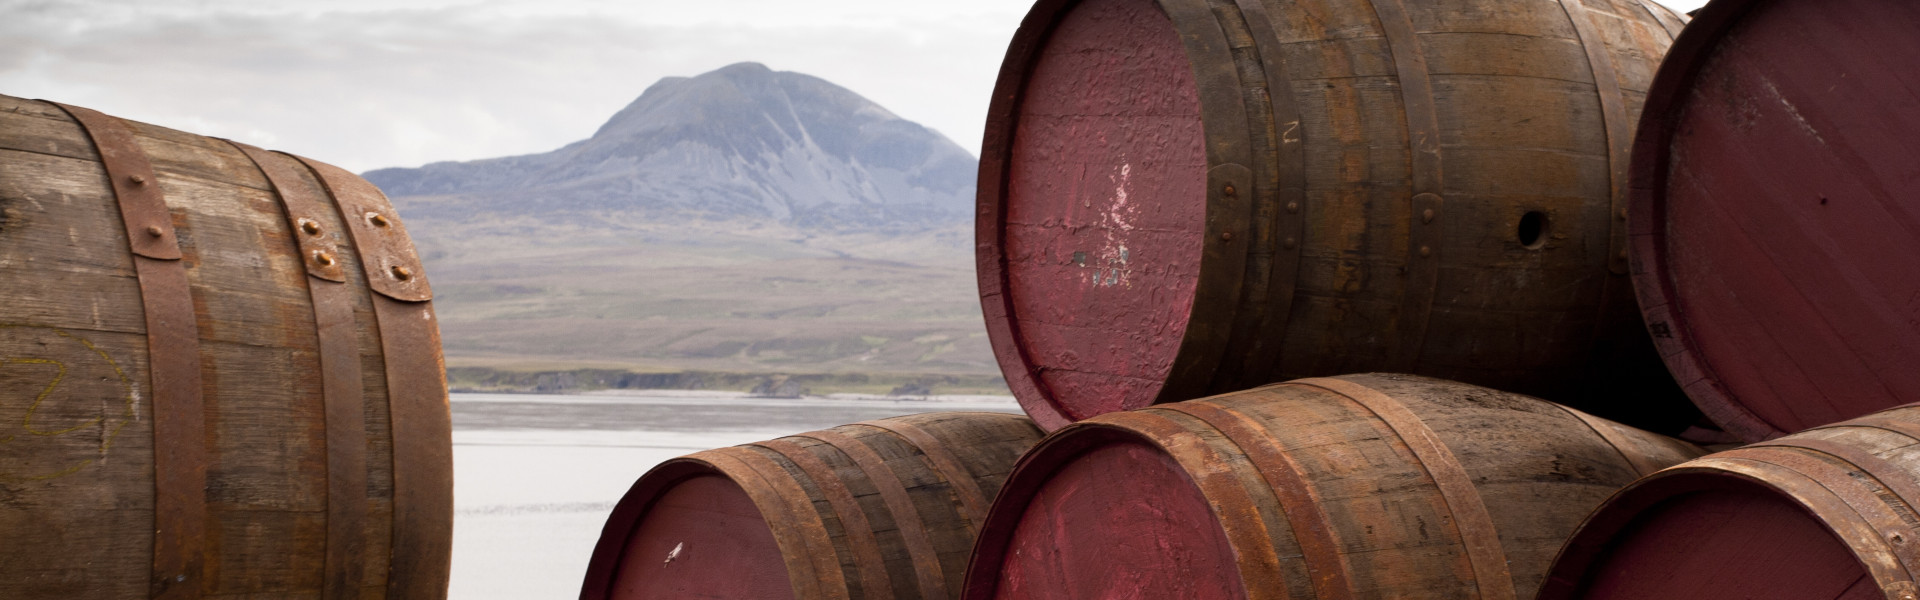 Whisky barrels on the isle of Islay